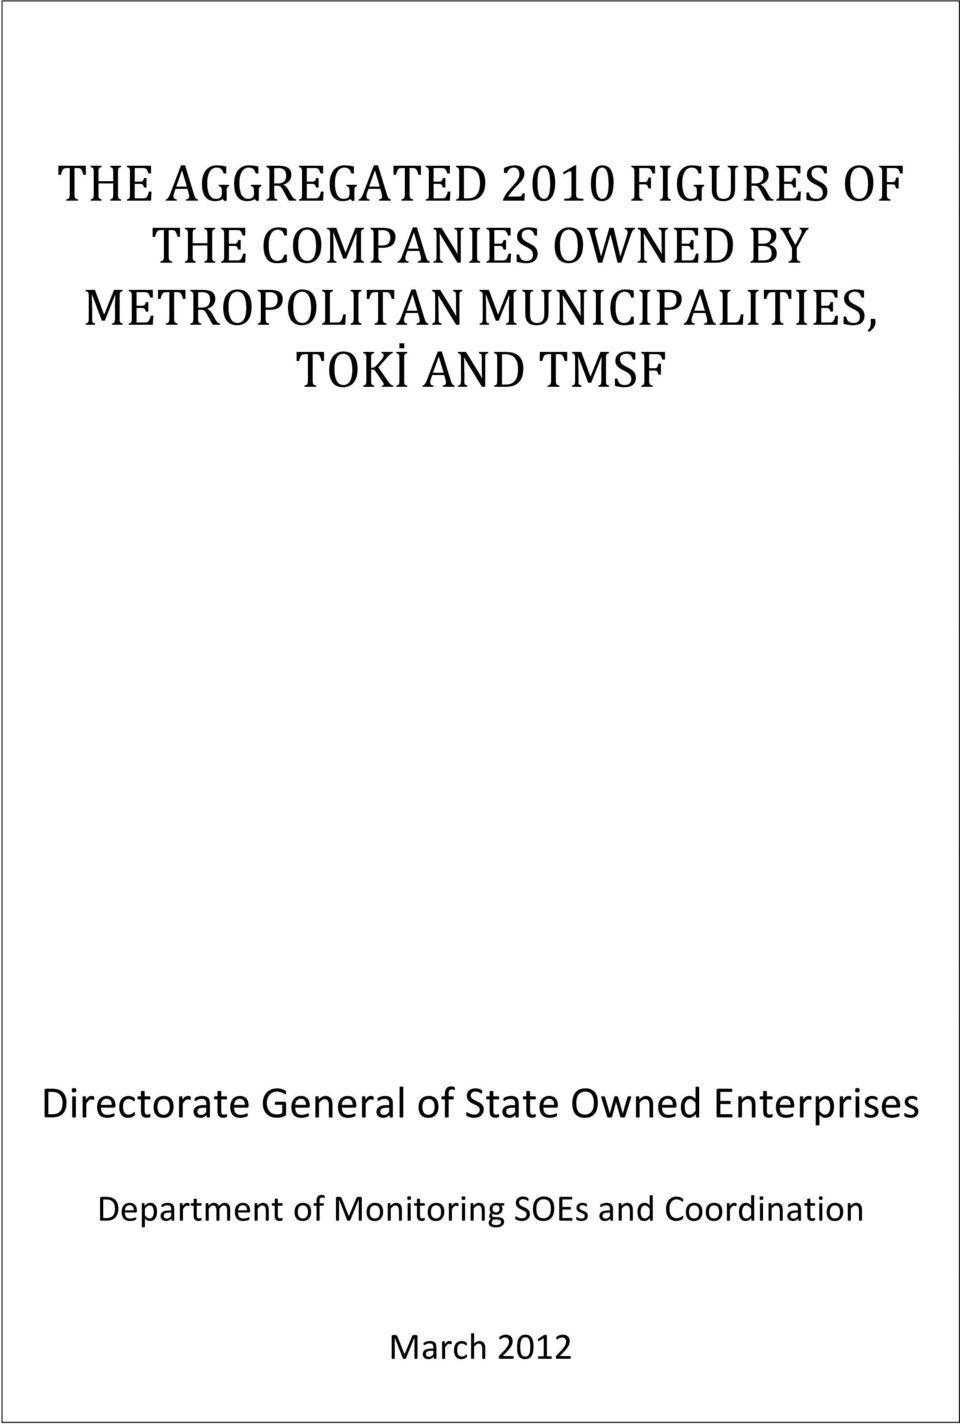 Directorate General of State Owned Enterprises